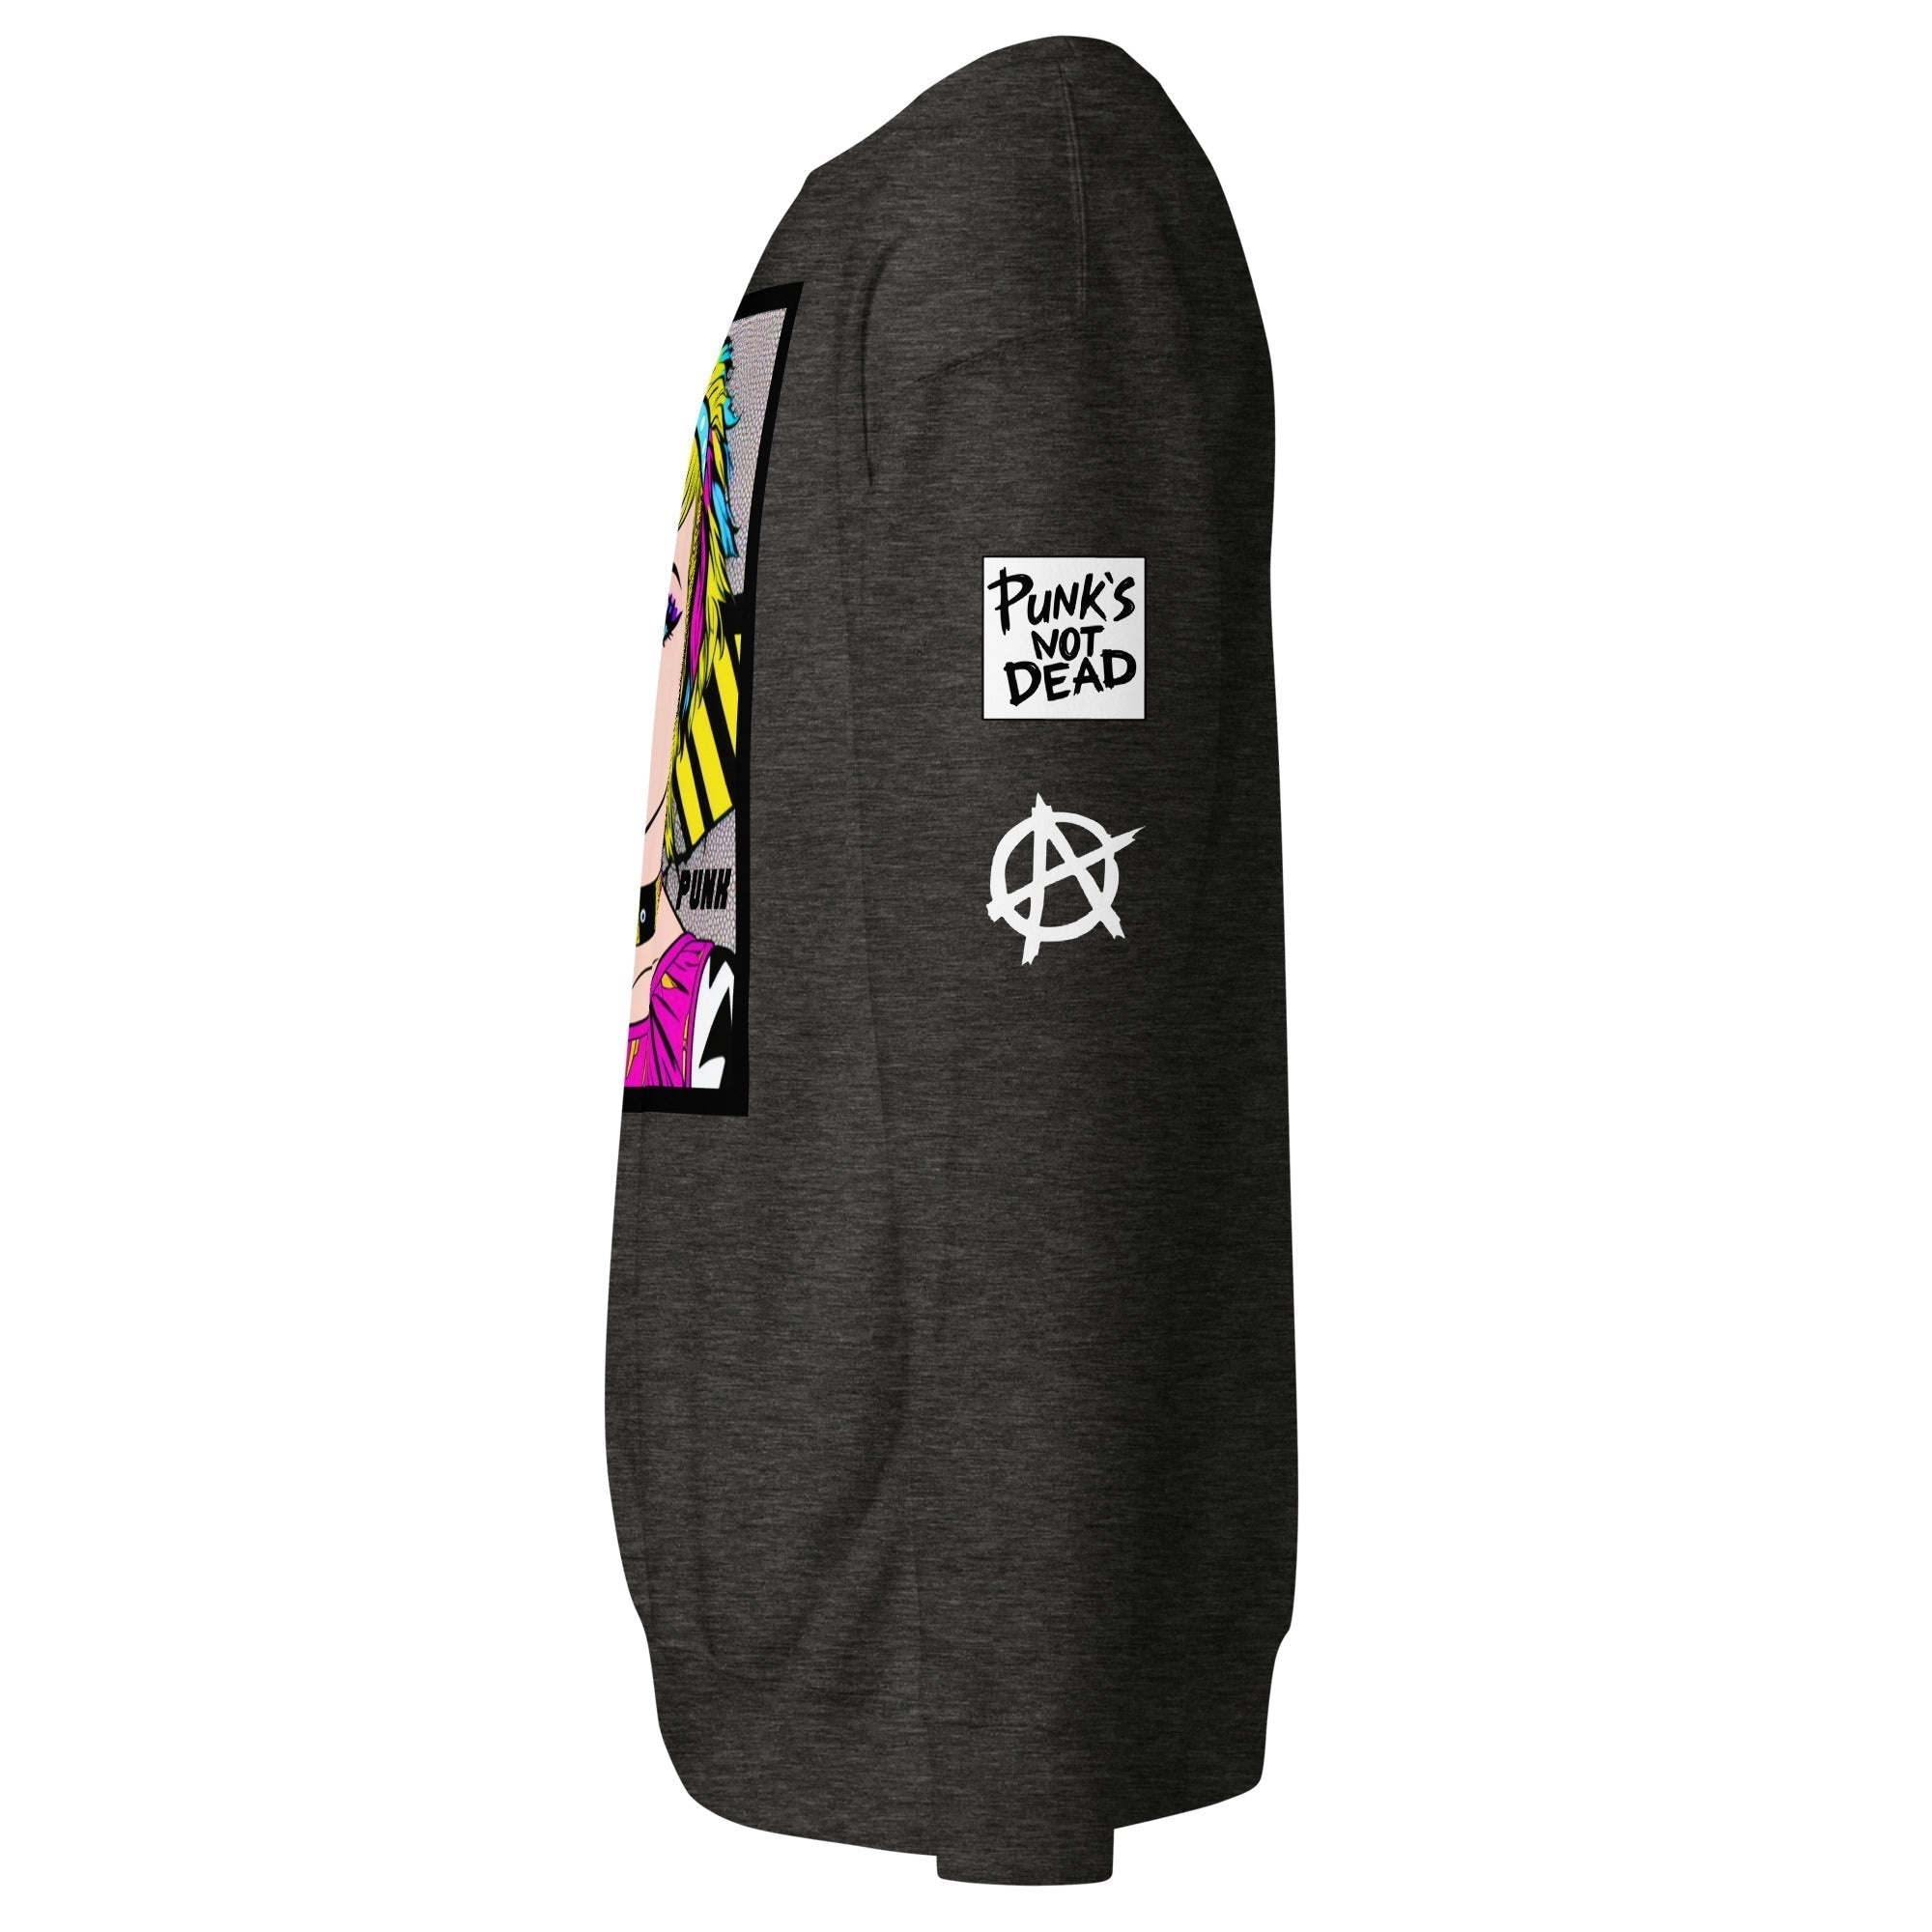 Unisex Premium Sweatshirt - Punk Pop Art Scene 11 - GRAPHIC T-SHIRTS